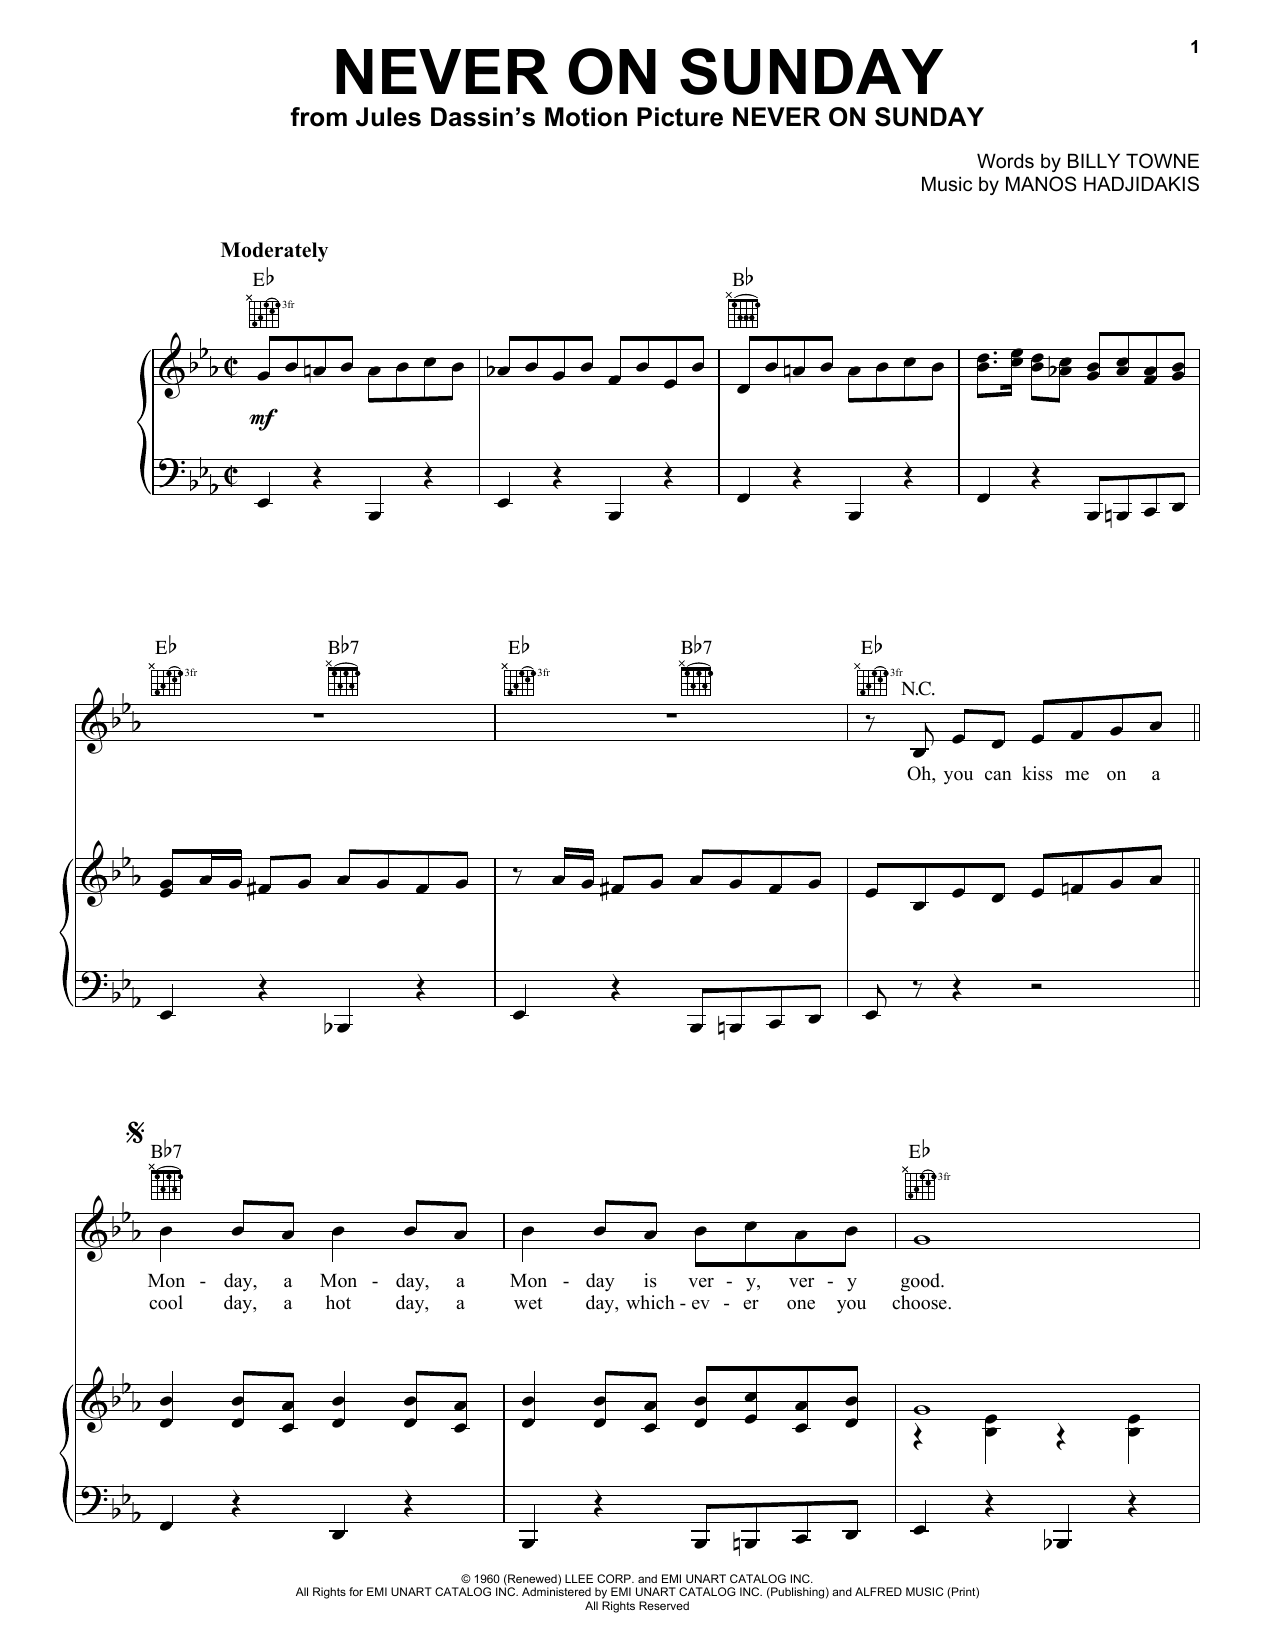 Manos Hadjidakis Never On Sunday Sheet Music Notes & Chords for Lead Sheet / Fake Book - Download or Print PDF